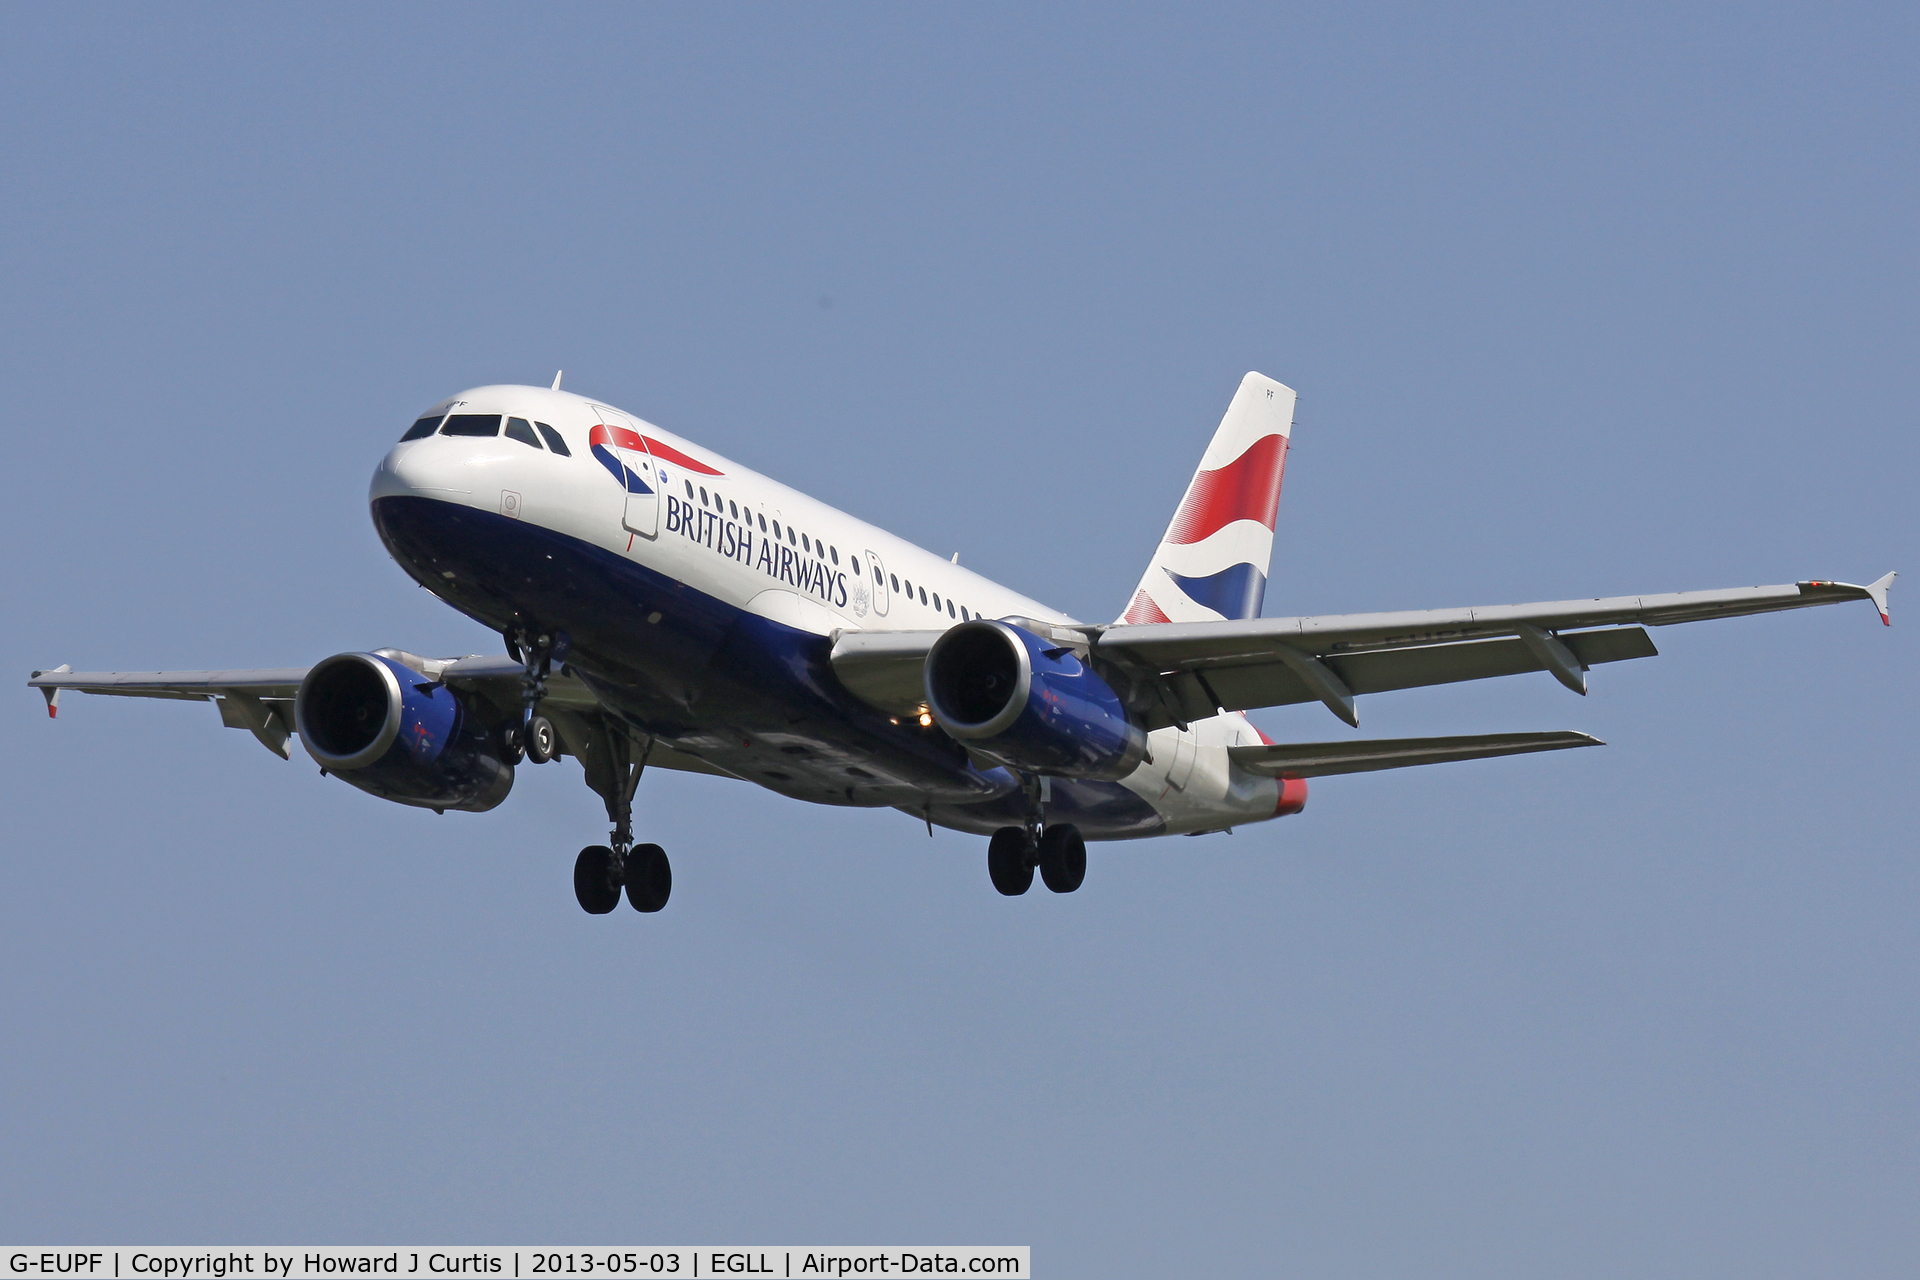 G-EUPF, 2000 Airbus A319-131 C/N 1197, British Airways, on approach to runway 27L.